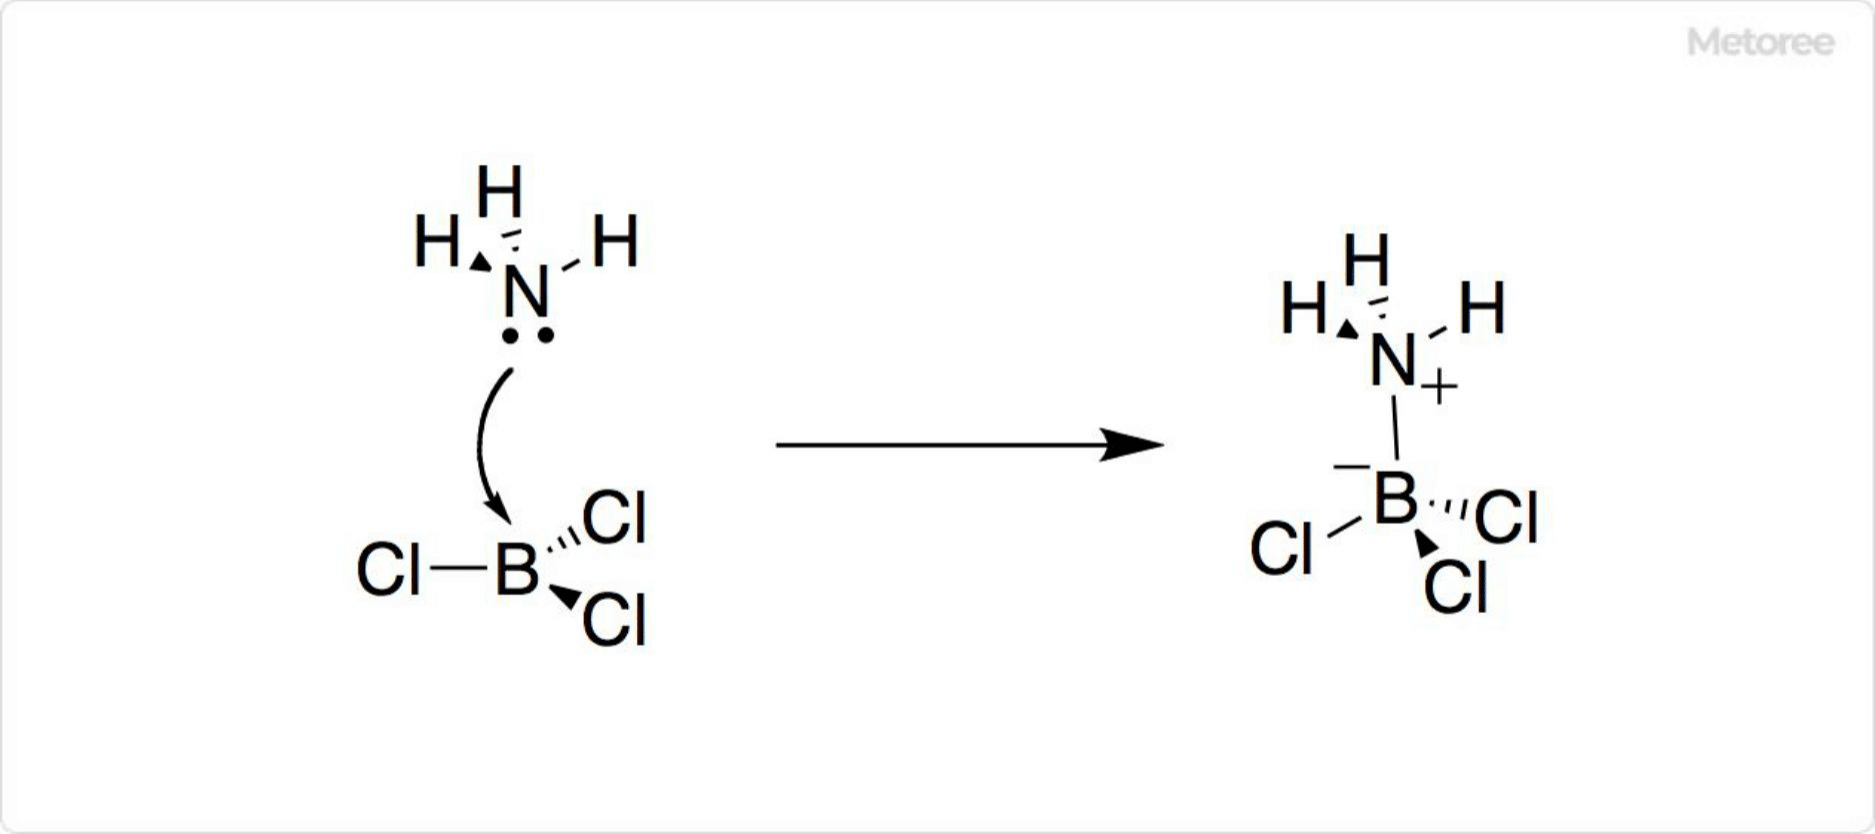 Figure 3. Reaction of Boron Trichloride